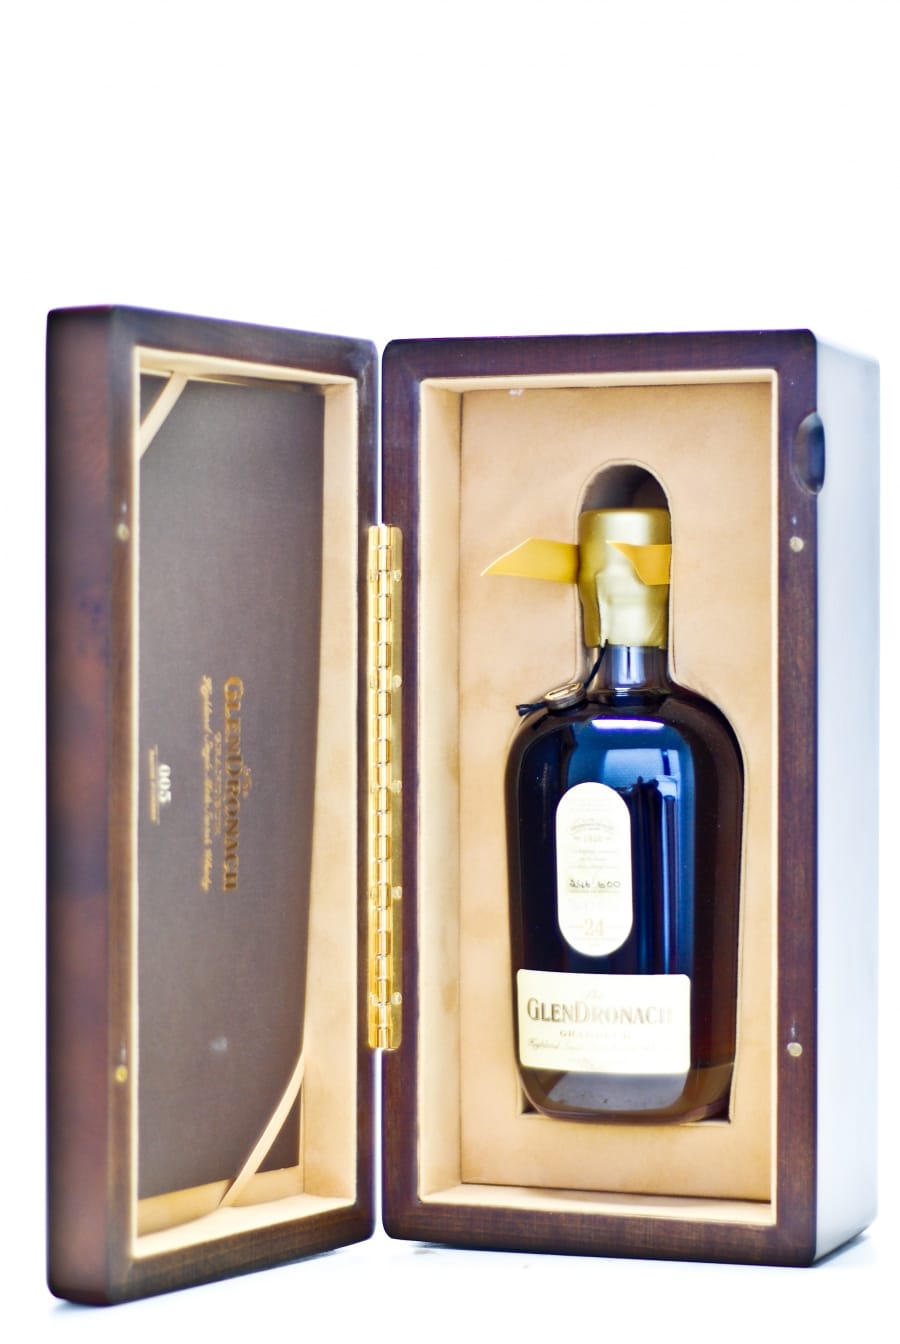 Glendronach - GlenDronach Grandeur 24 years old Batch 5  Oloroso Sherry Casks 48.9 % Vol  bottled 15.05.2014 1 0f 600 bottles NV Perfect